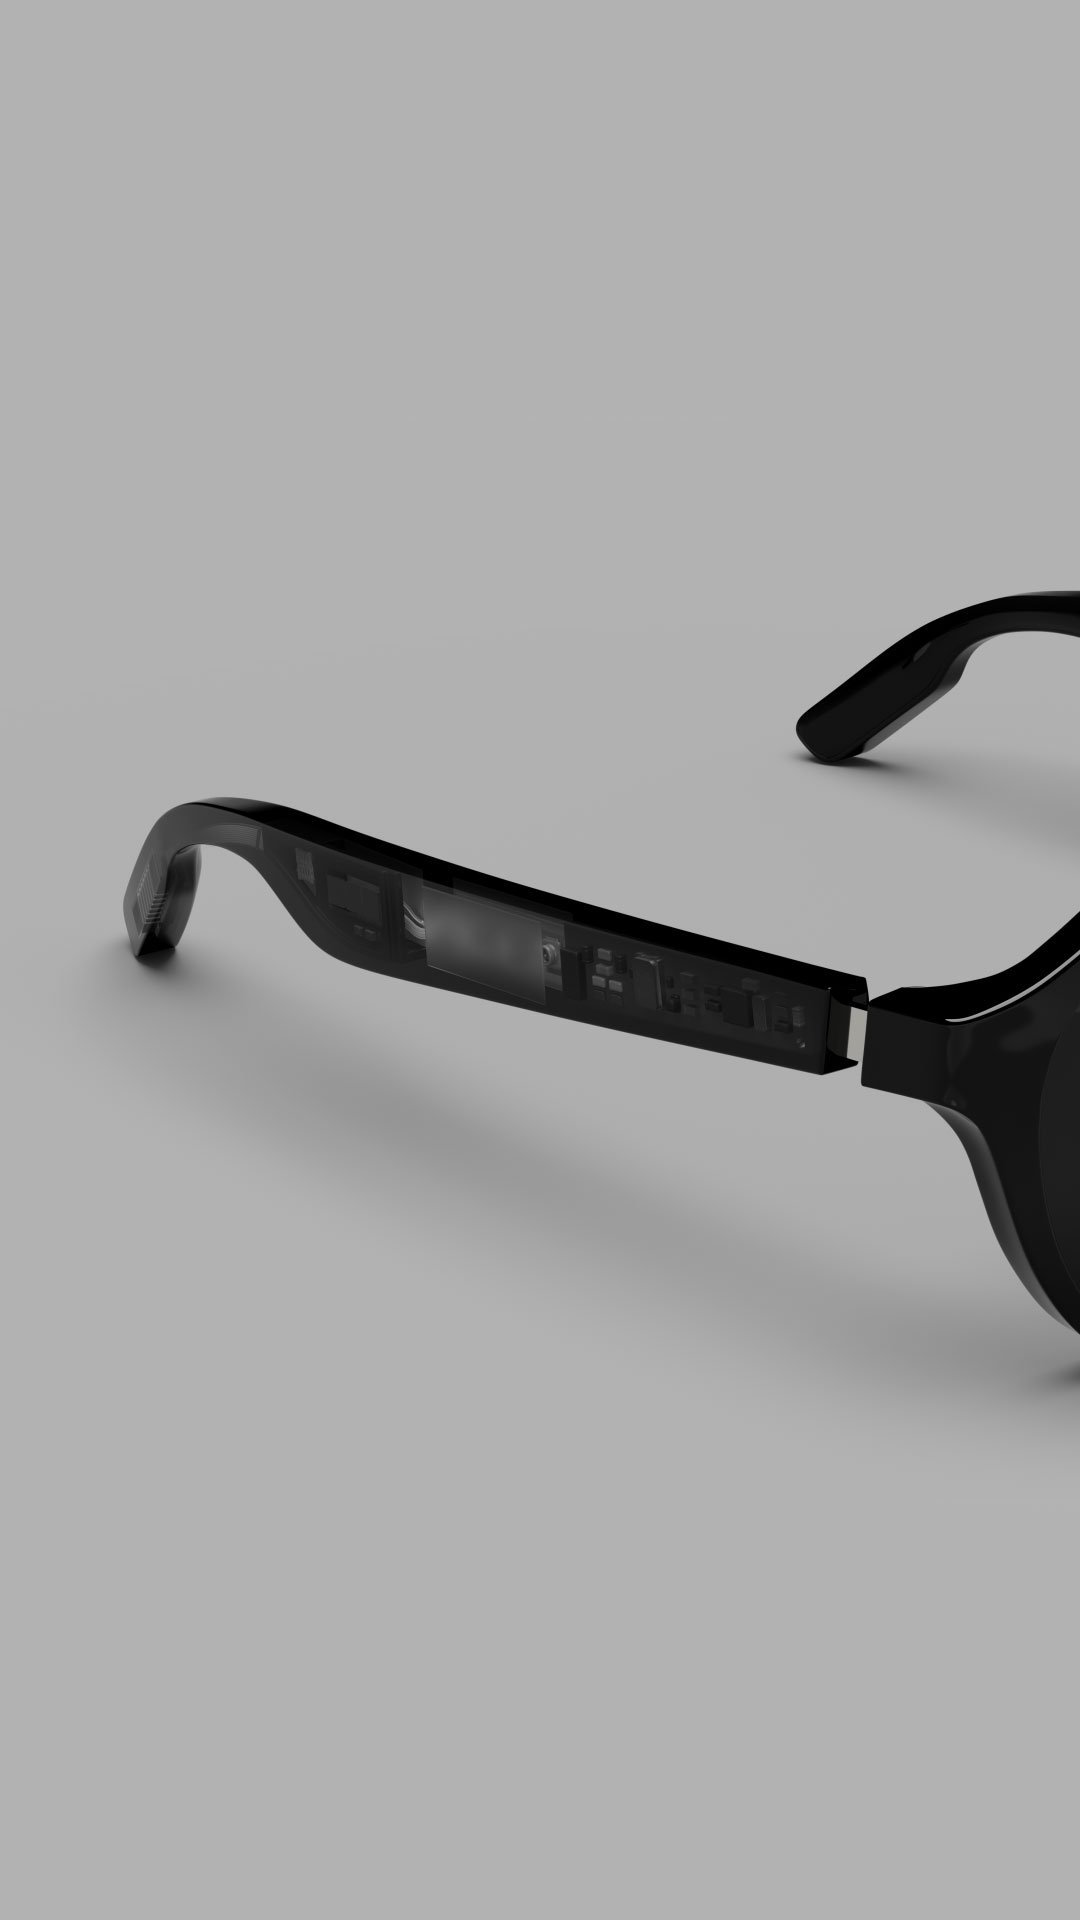 Bluetooth audio sunglasses with speakers